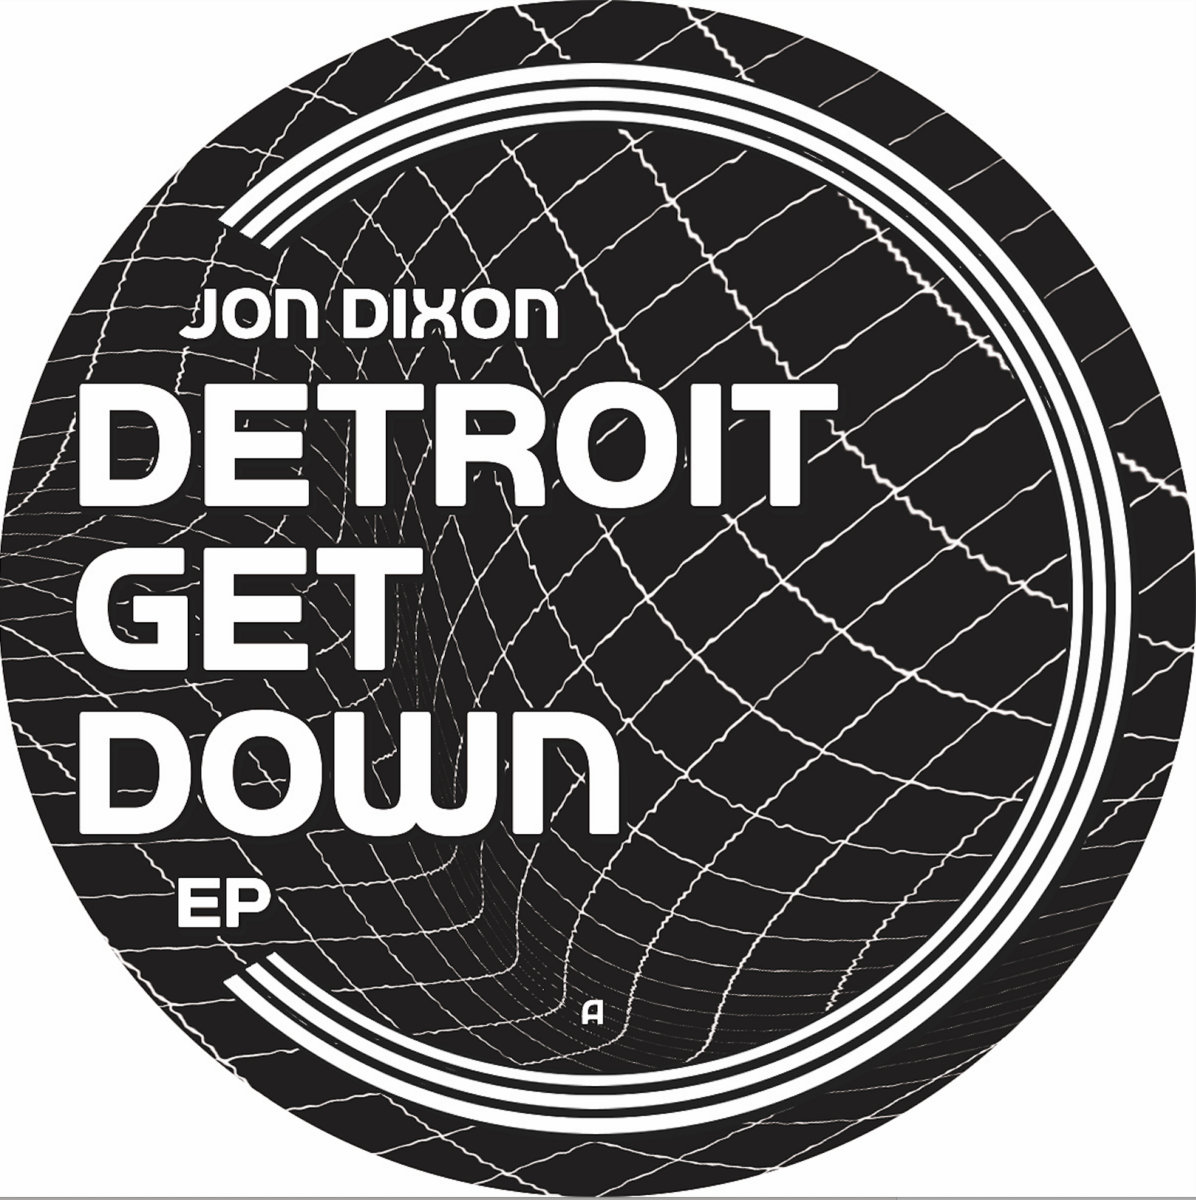 Jon Dixon/DETROIT GET DOWN EP 12"